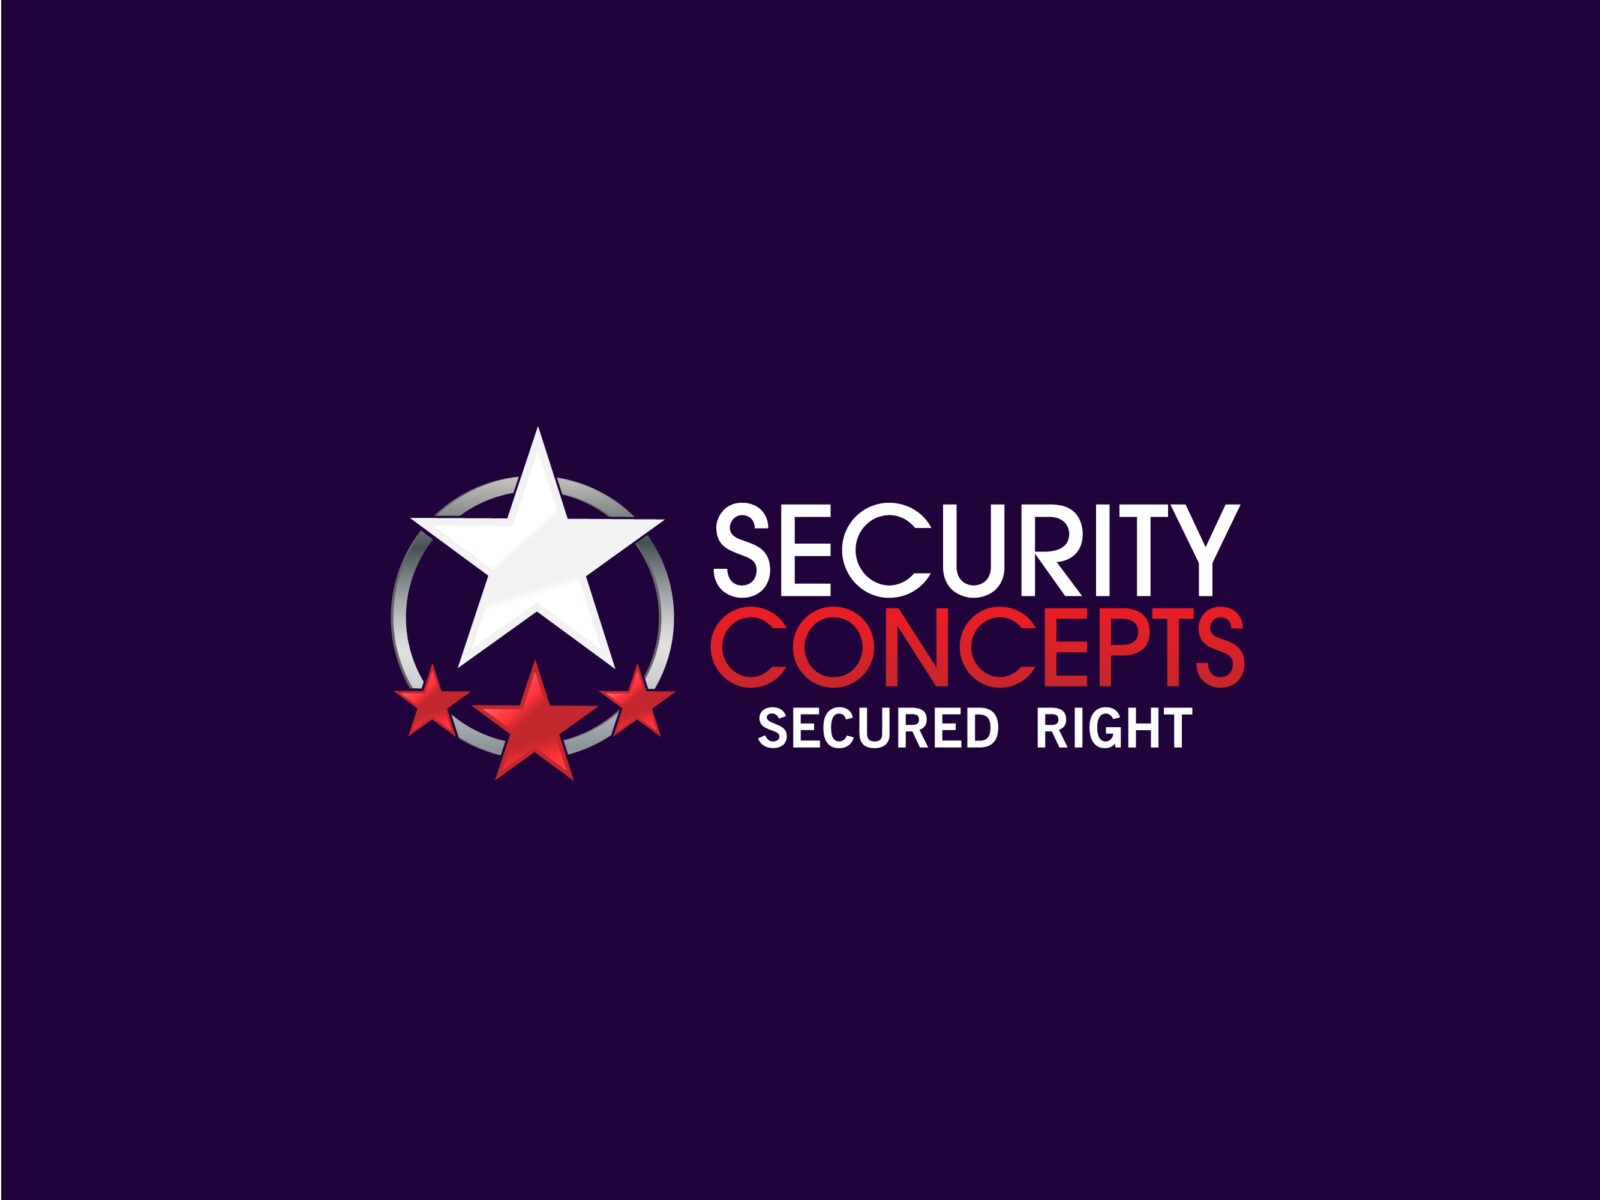 Venue and Night Club Security SOP